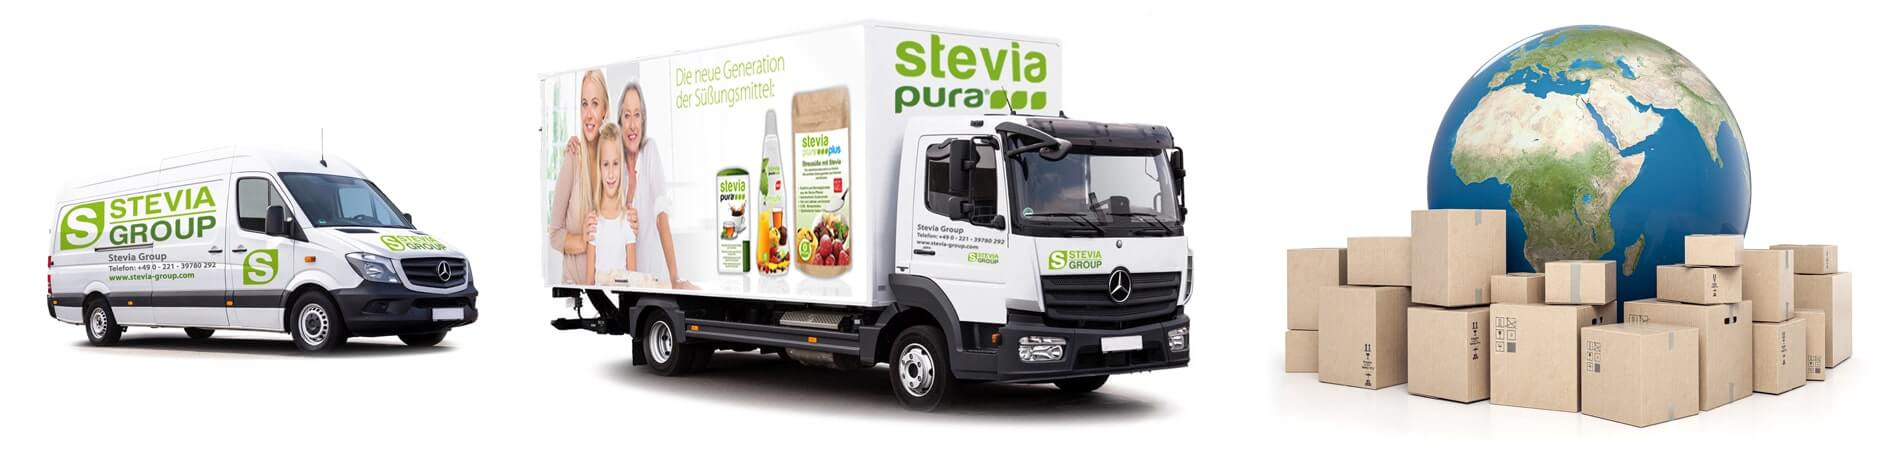 Shipping costs stevia-pura steviapura stevia 